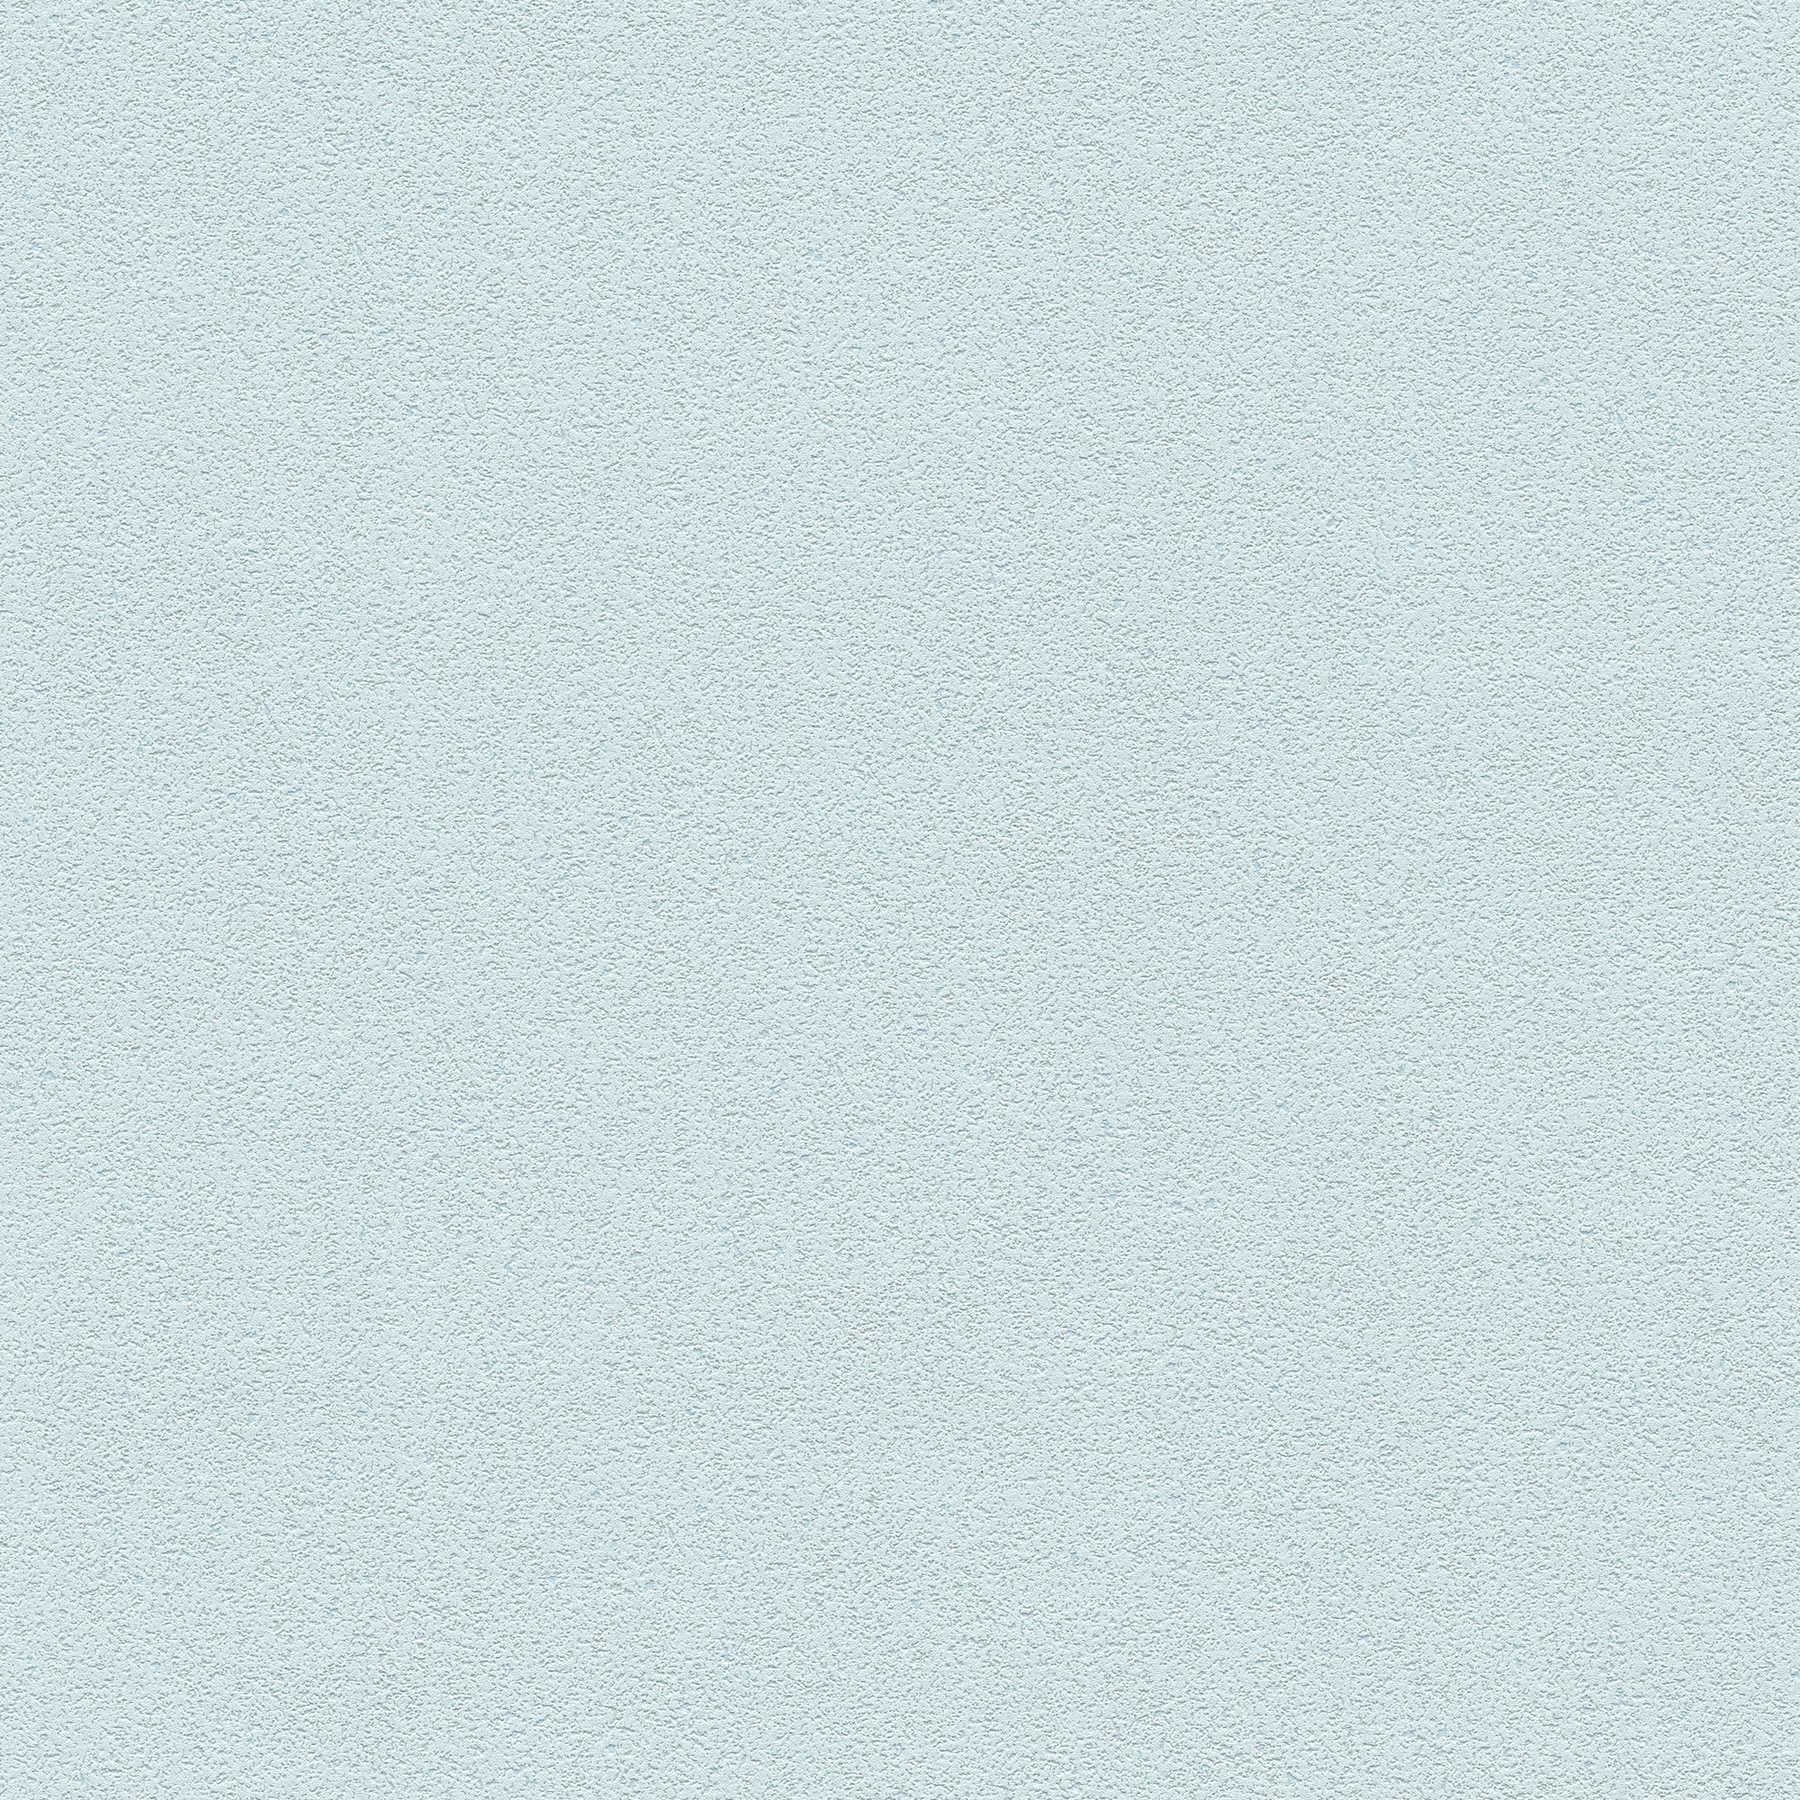 Plain wallpaper with fine surface texture - blue
